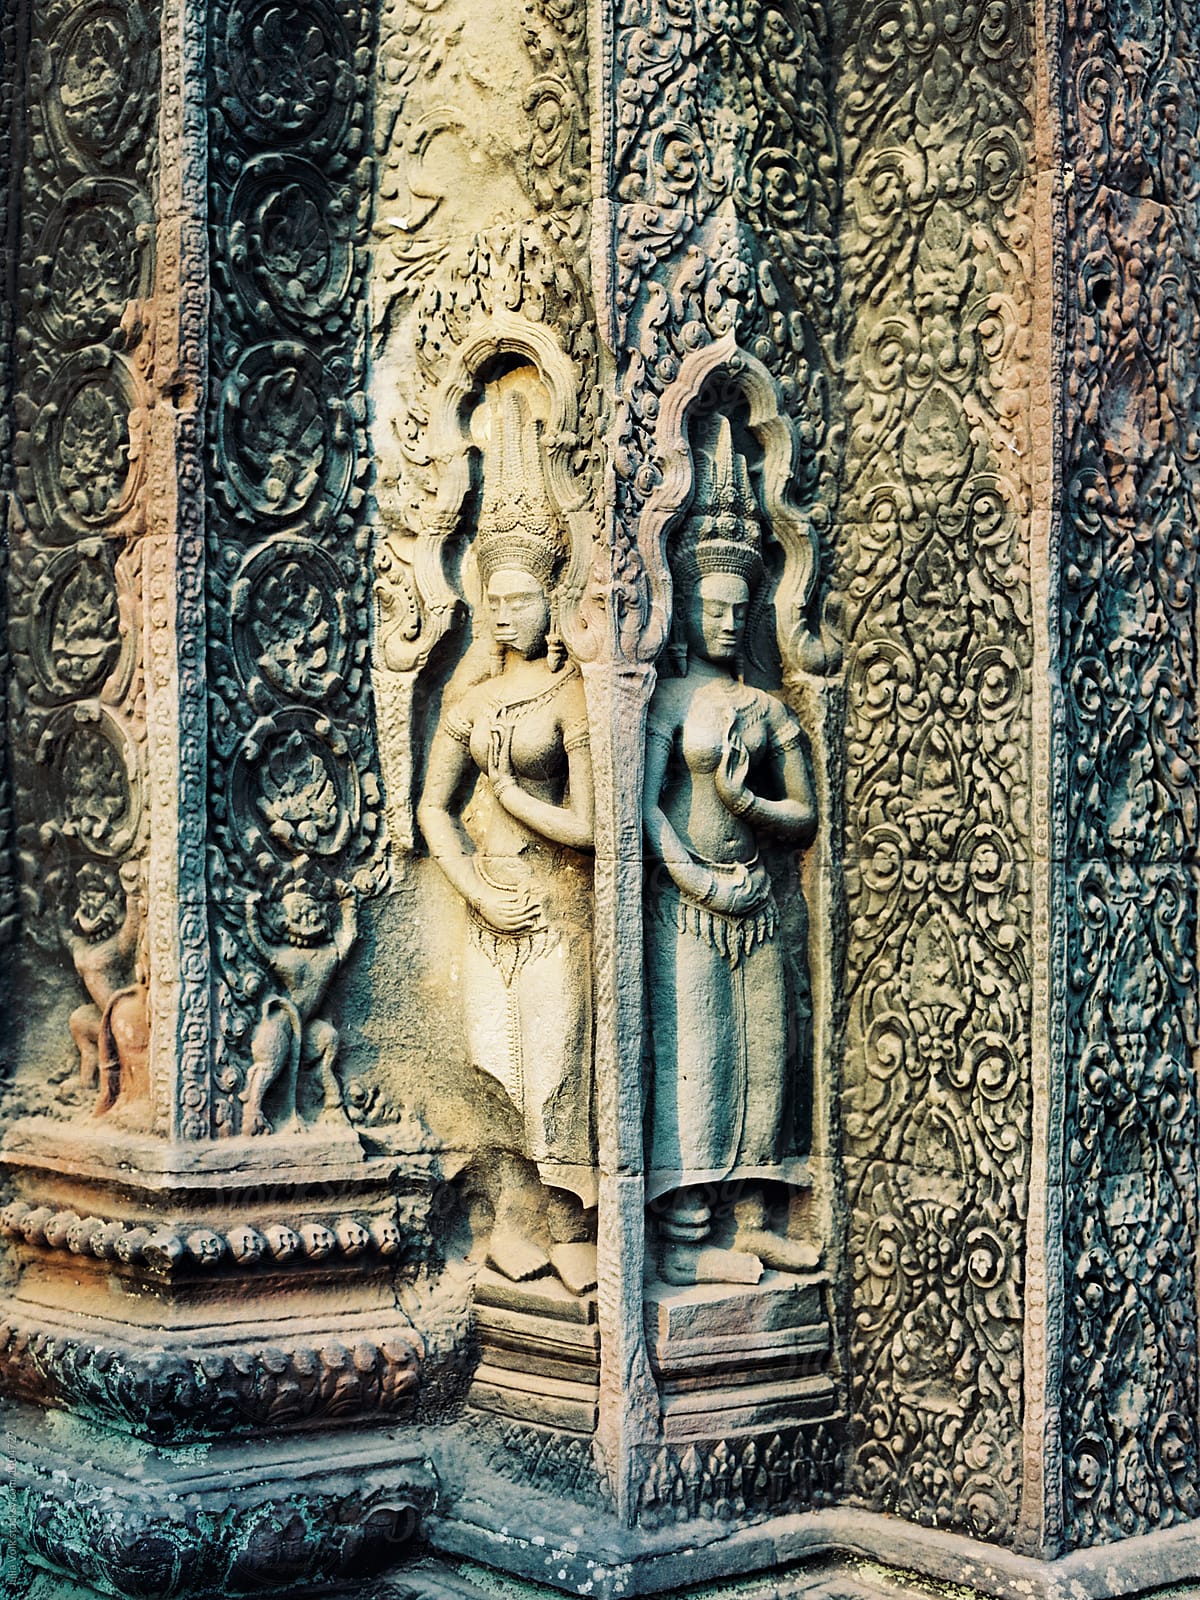 Sculptures in ancient temple